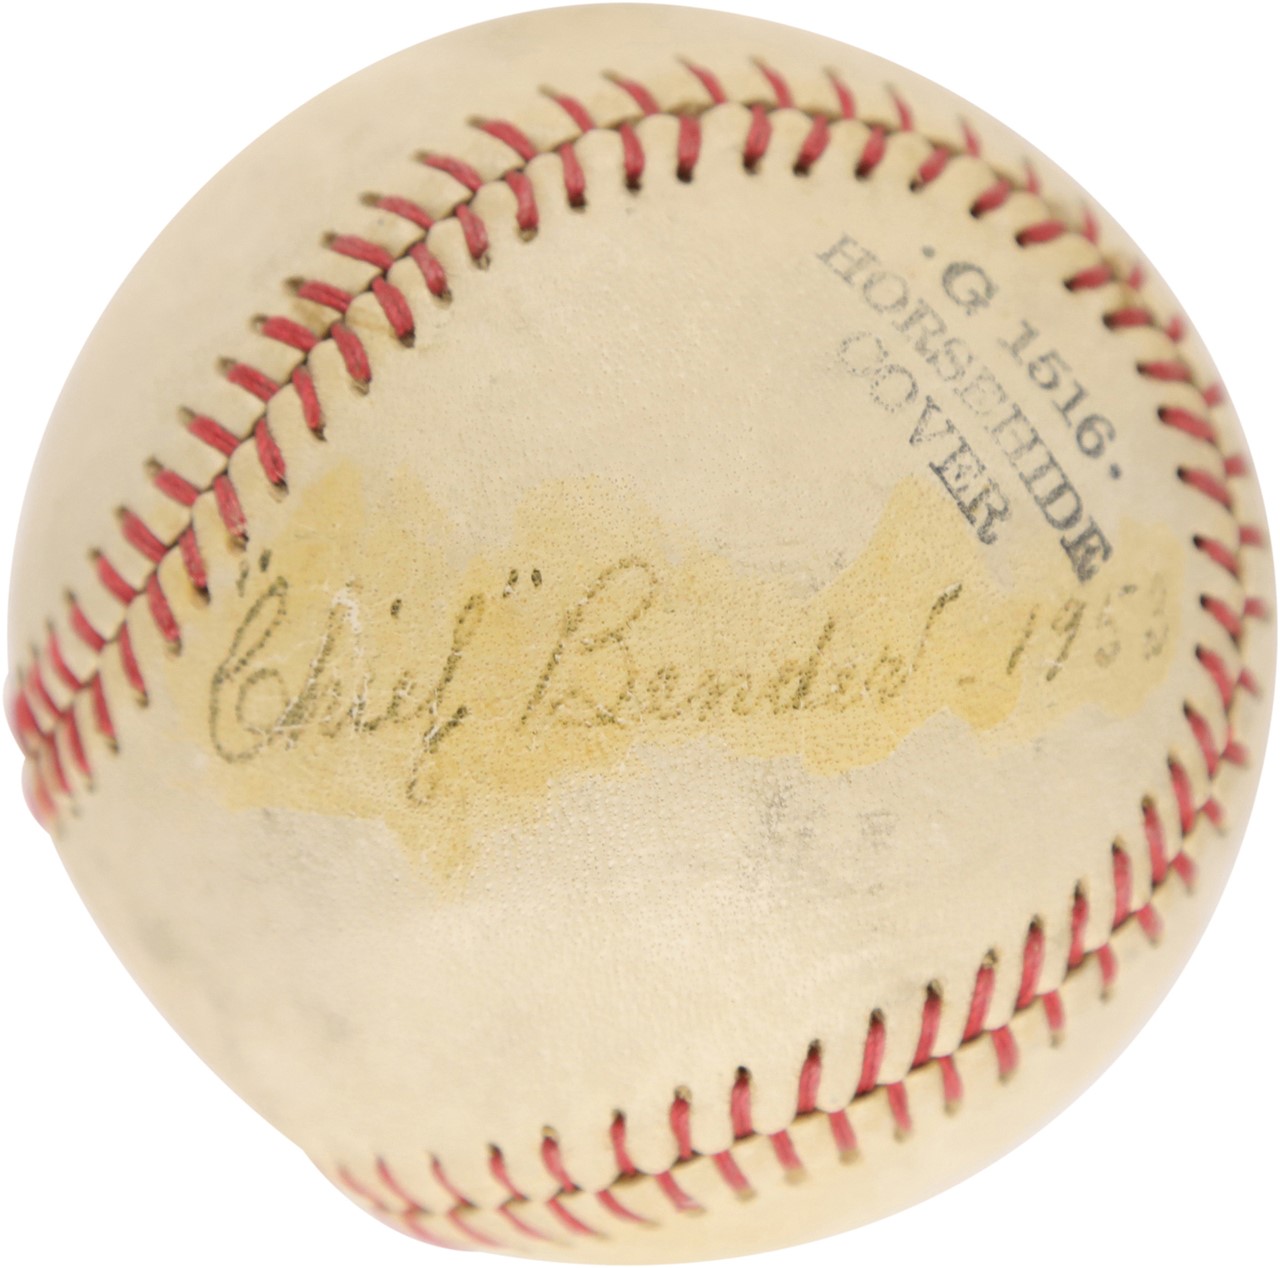 Baseball Autographs - Chief Bender Single-Signed Baseball (JSA)